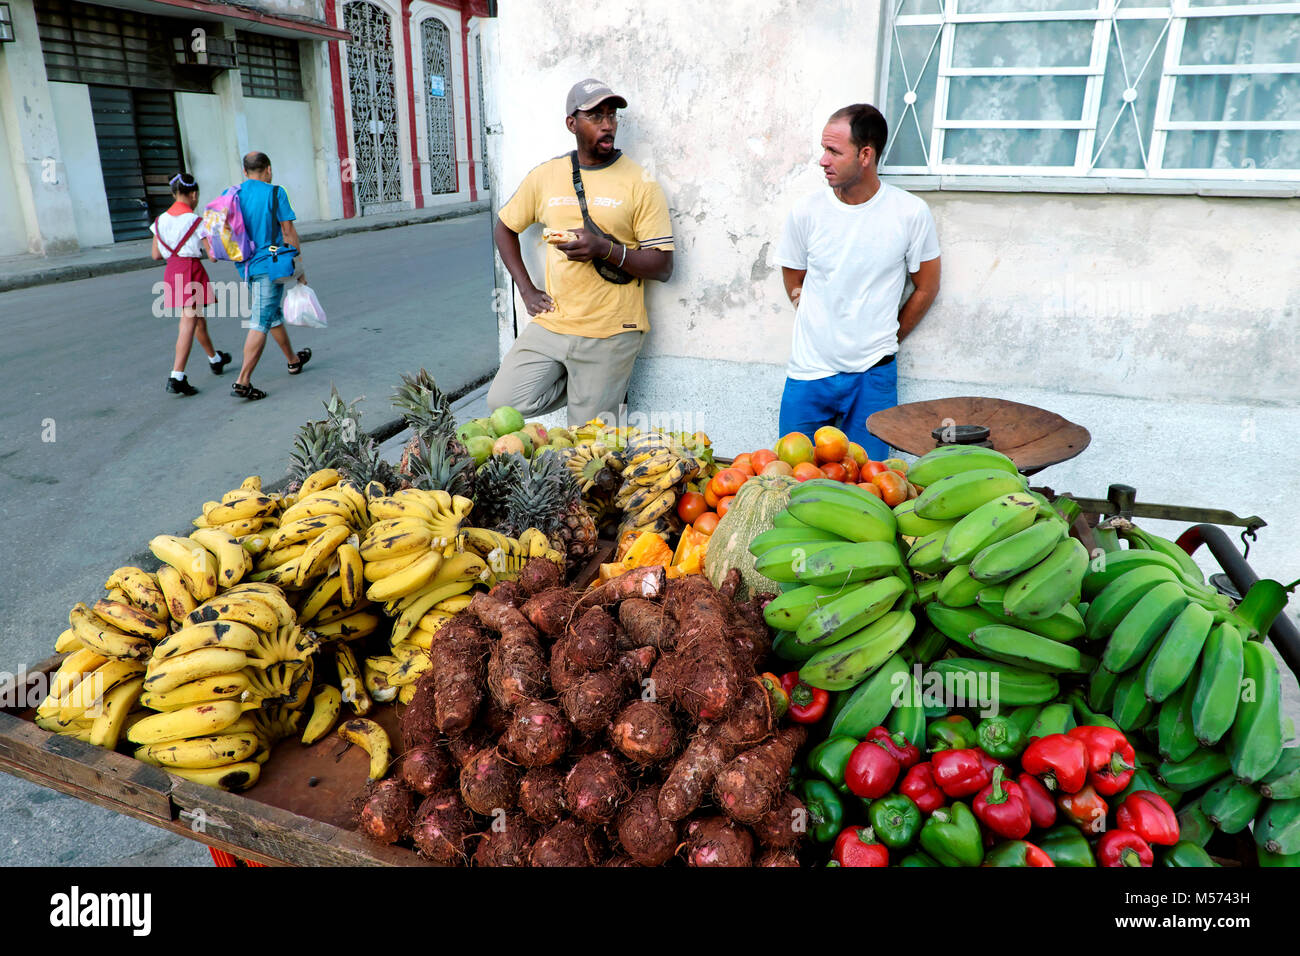 Fruit and vegetables seller, Central Havana, Cuba Stock Photo